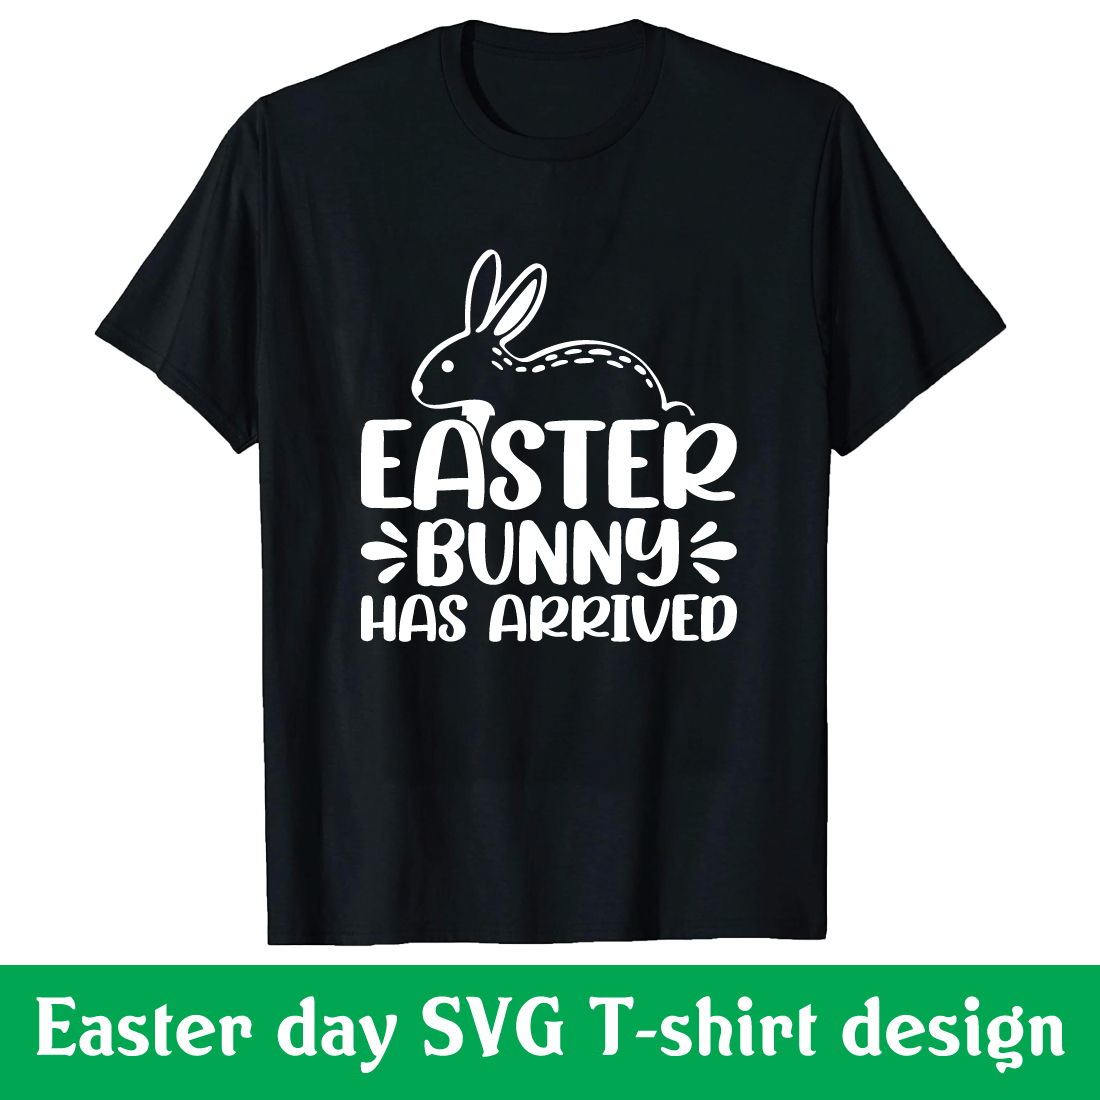 Easter bunny has arrived SVG T-shirt design cover image.